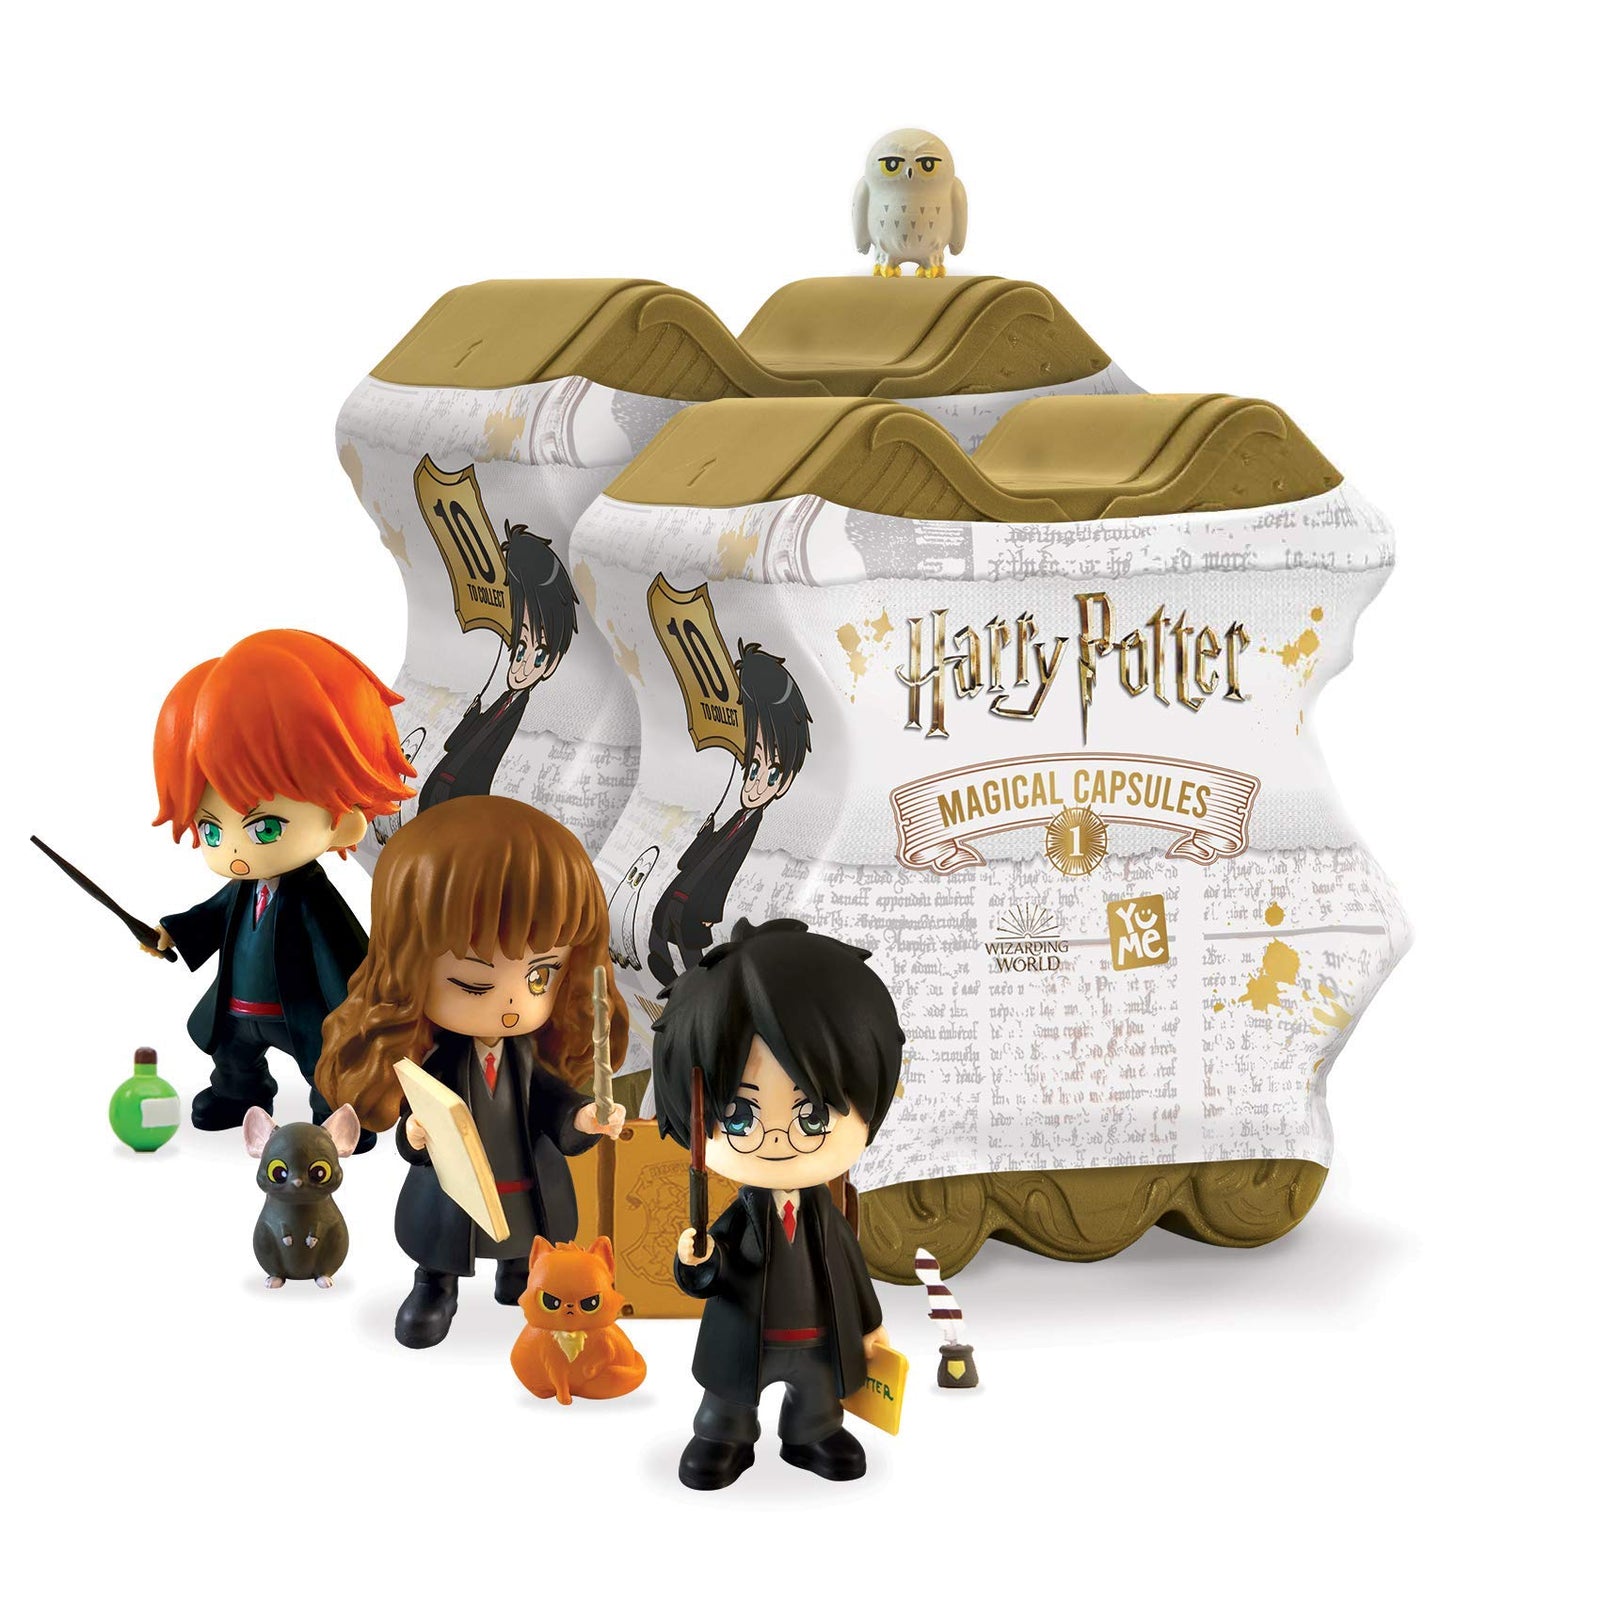 2-Pack Harry Potter Magical Capsule - Series 1